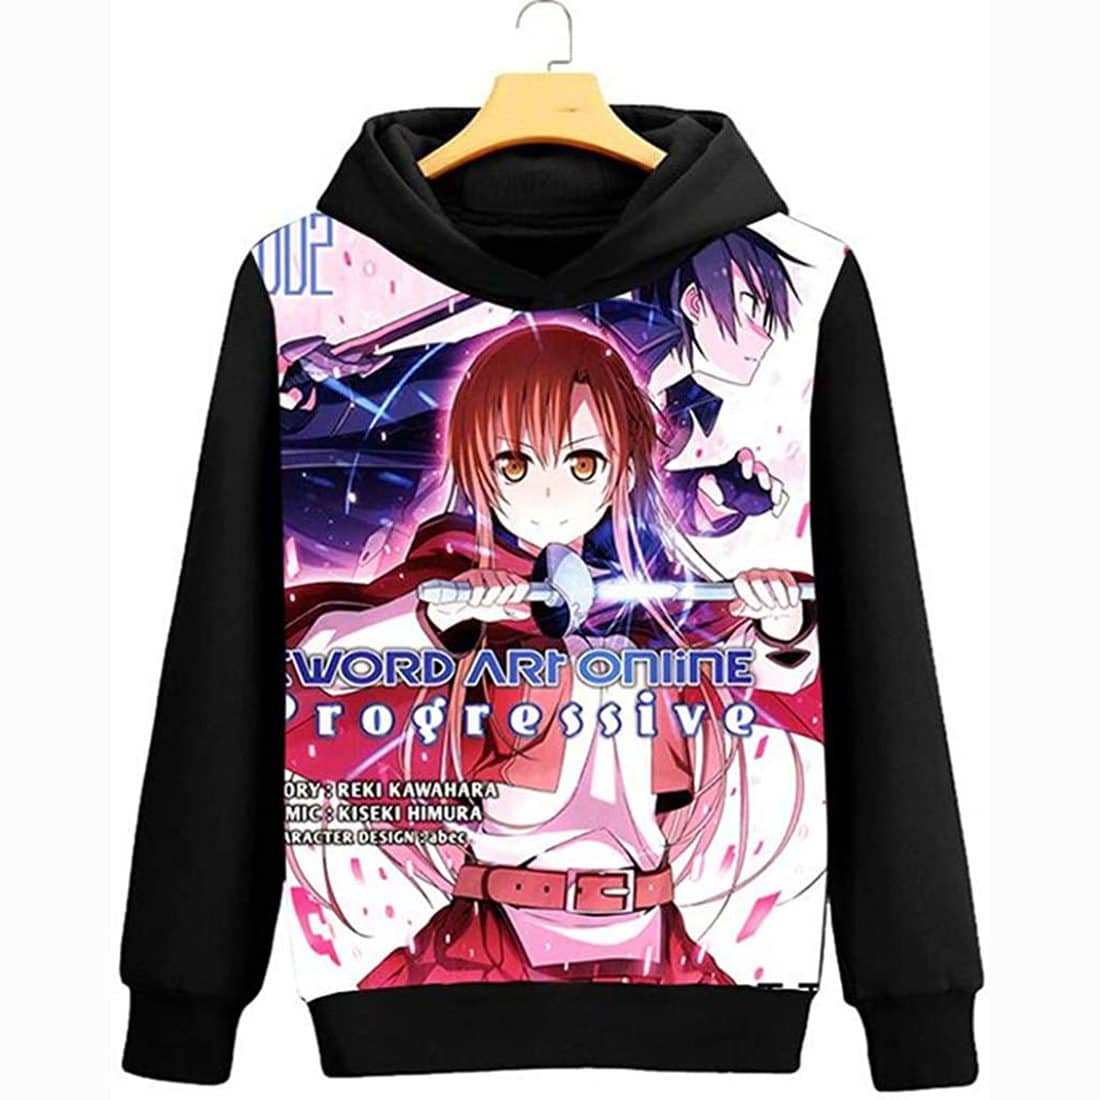 Anime Sword Art Online SAO Cosplay Jacket Sweatshirt Fleeces Costume Hoodie